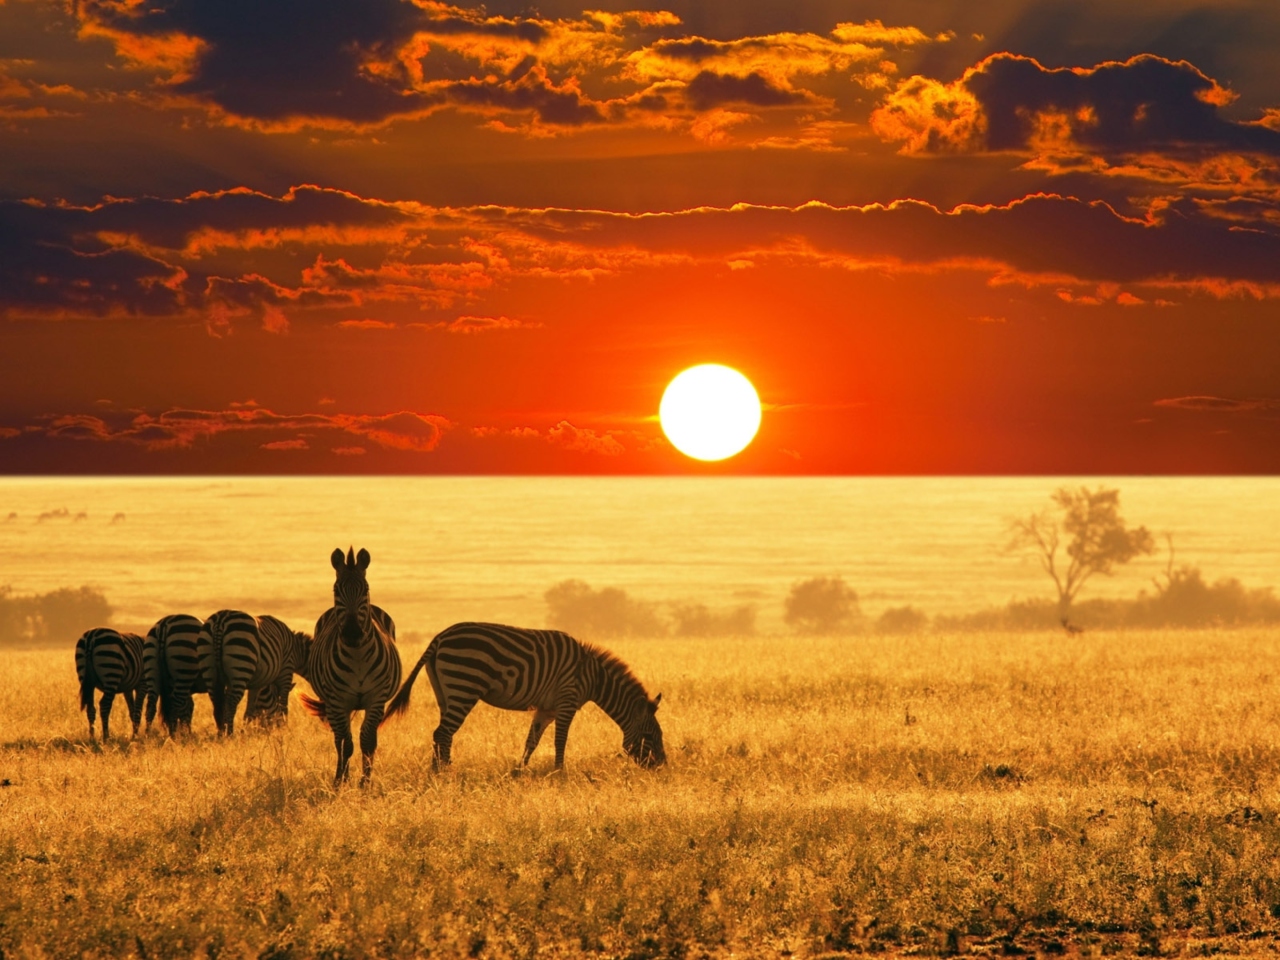 Обои Zebras At Sunset In Savannah Africa 1280x960